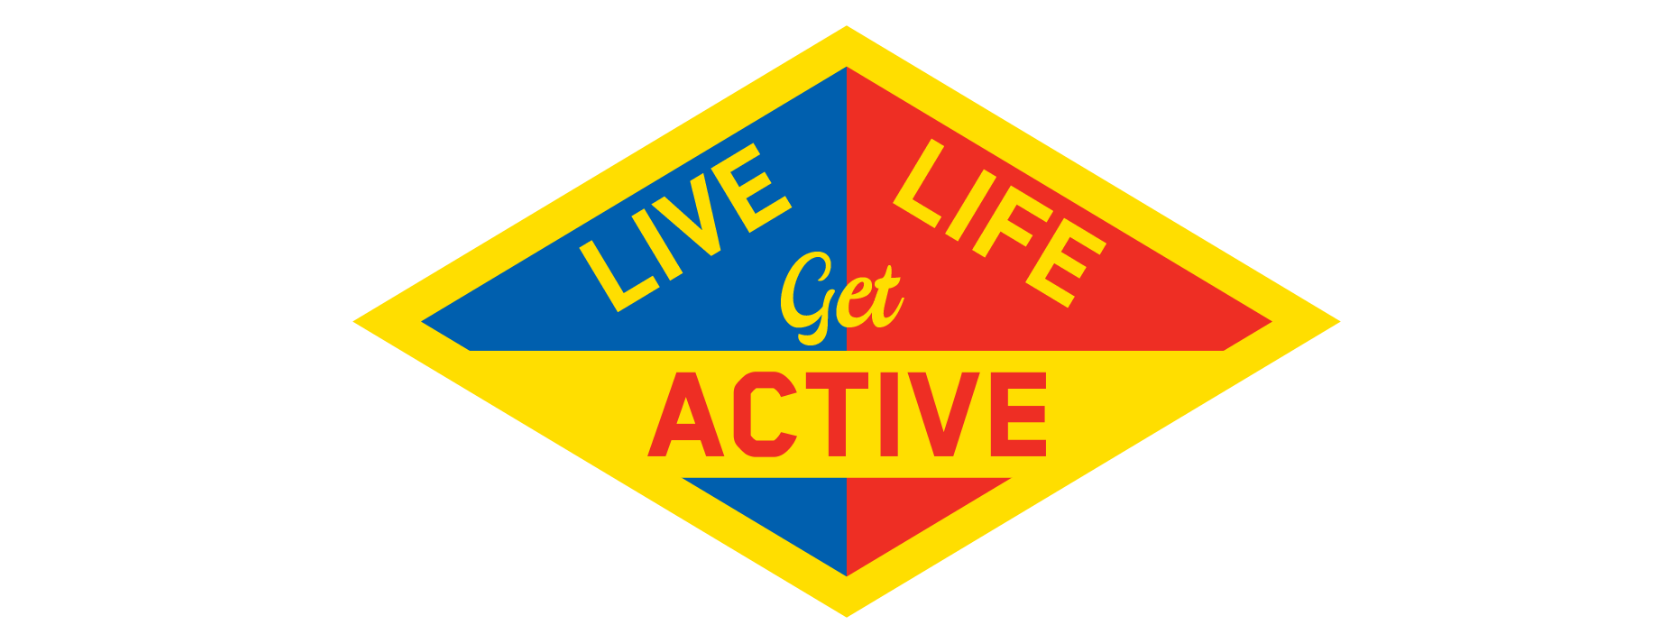 Live Life Get Active